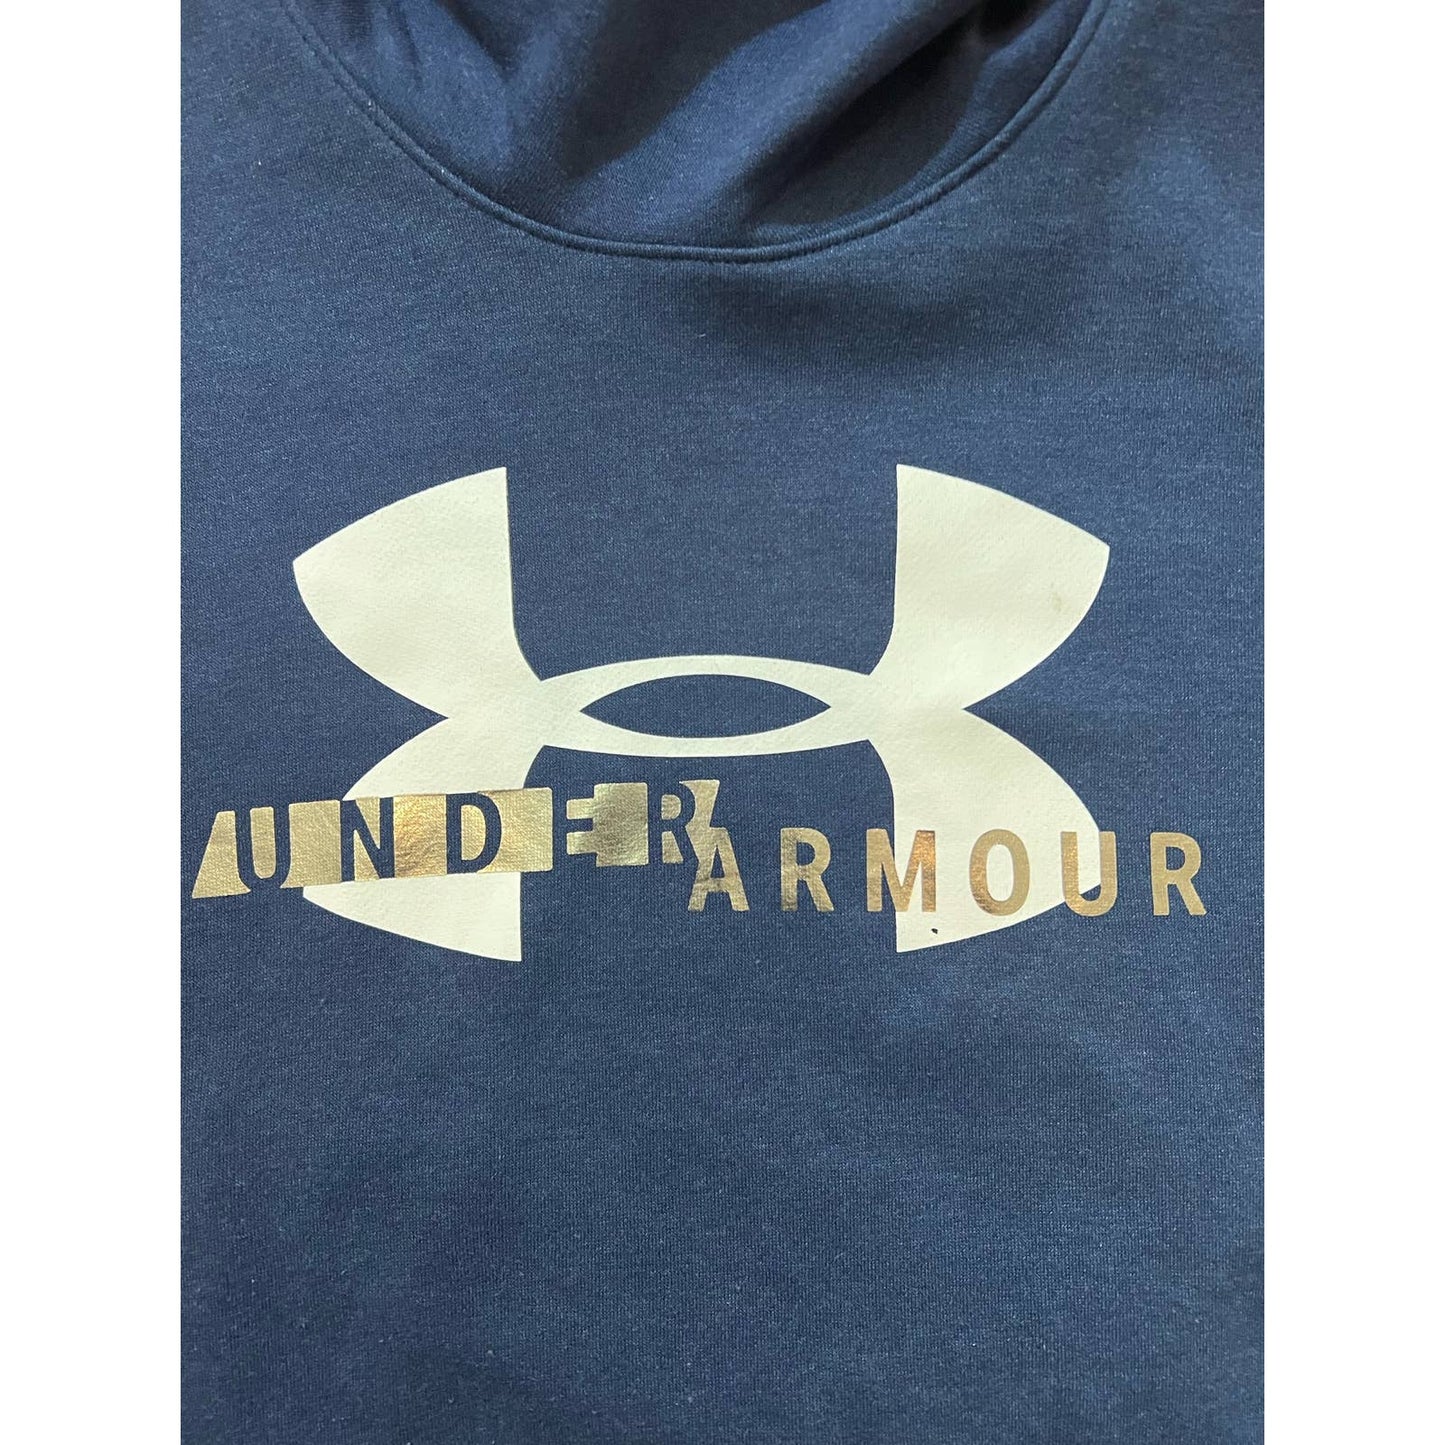 Under armour hoodie navy